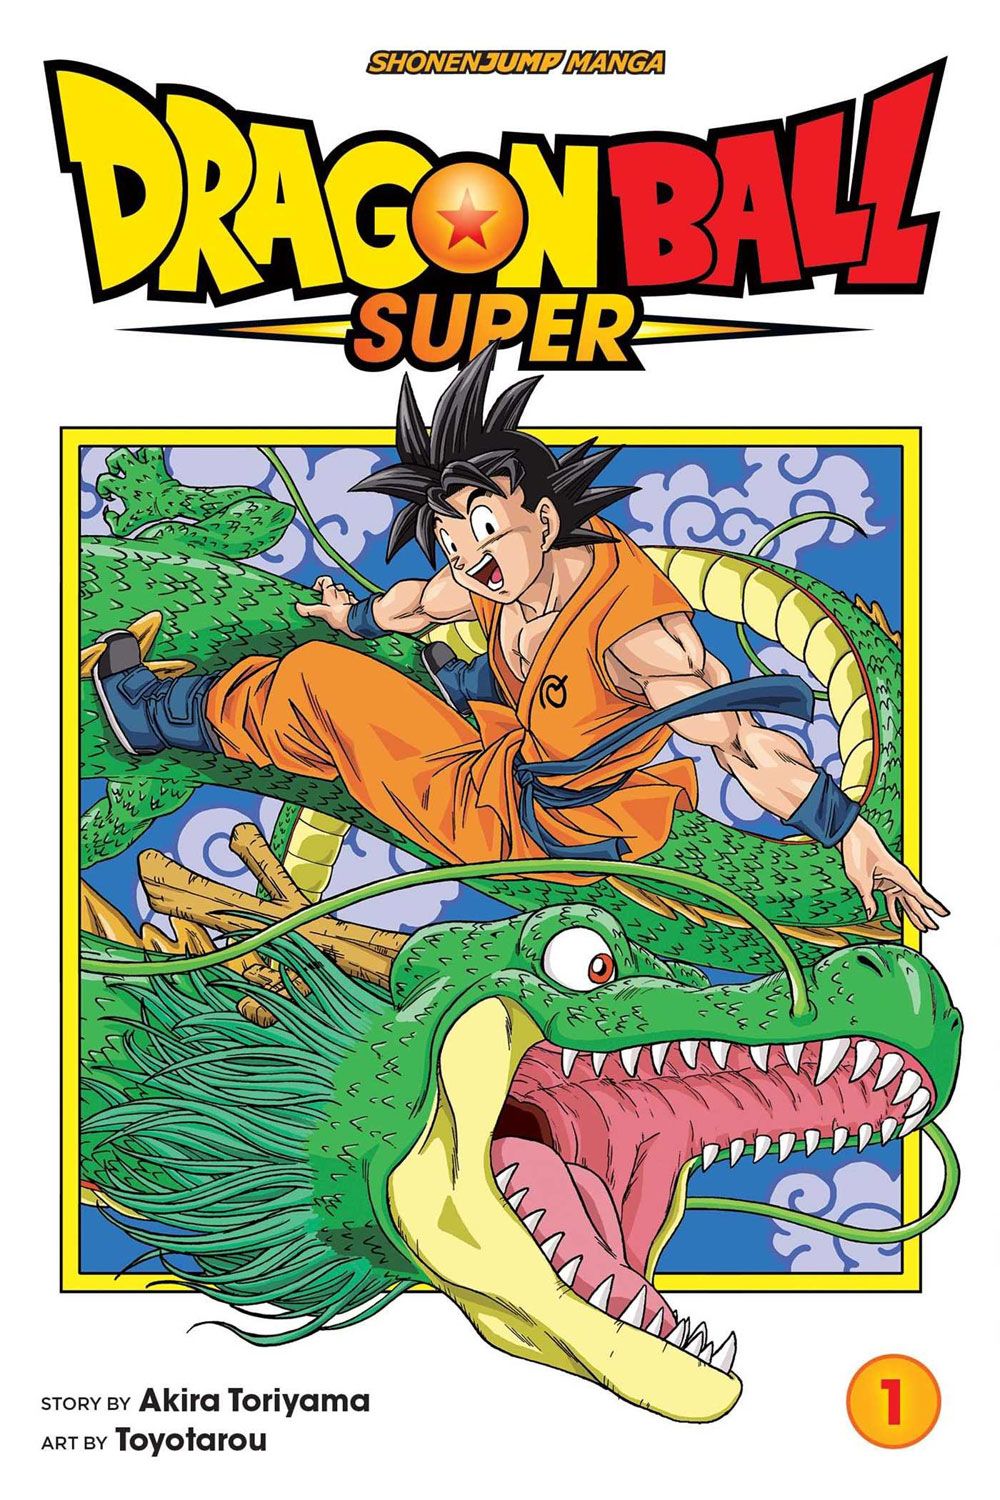 Dragon Ball Super Shares Impressive Cover Art of Galactic Patrolman Goku